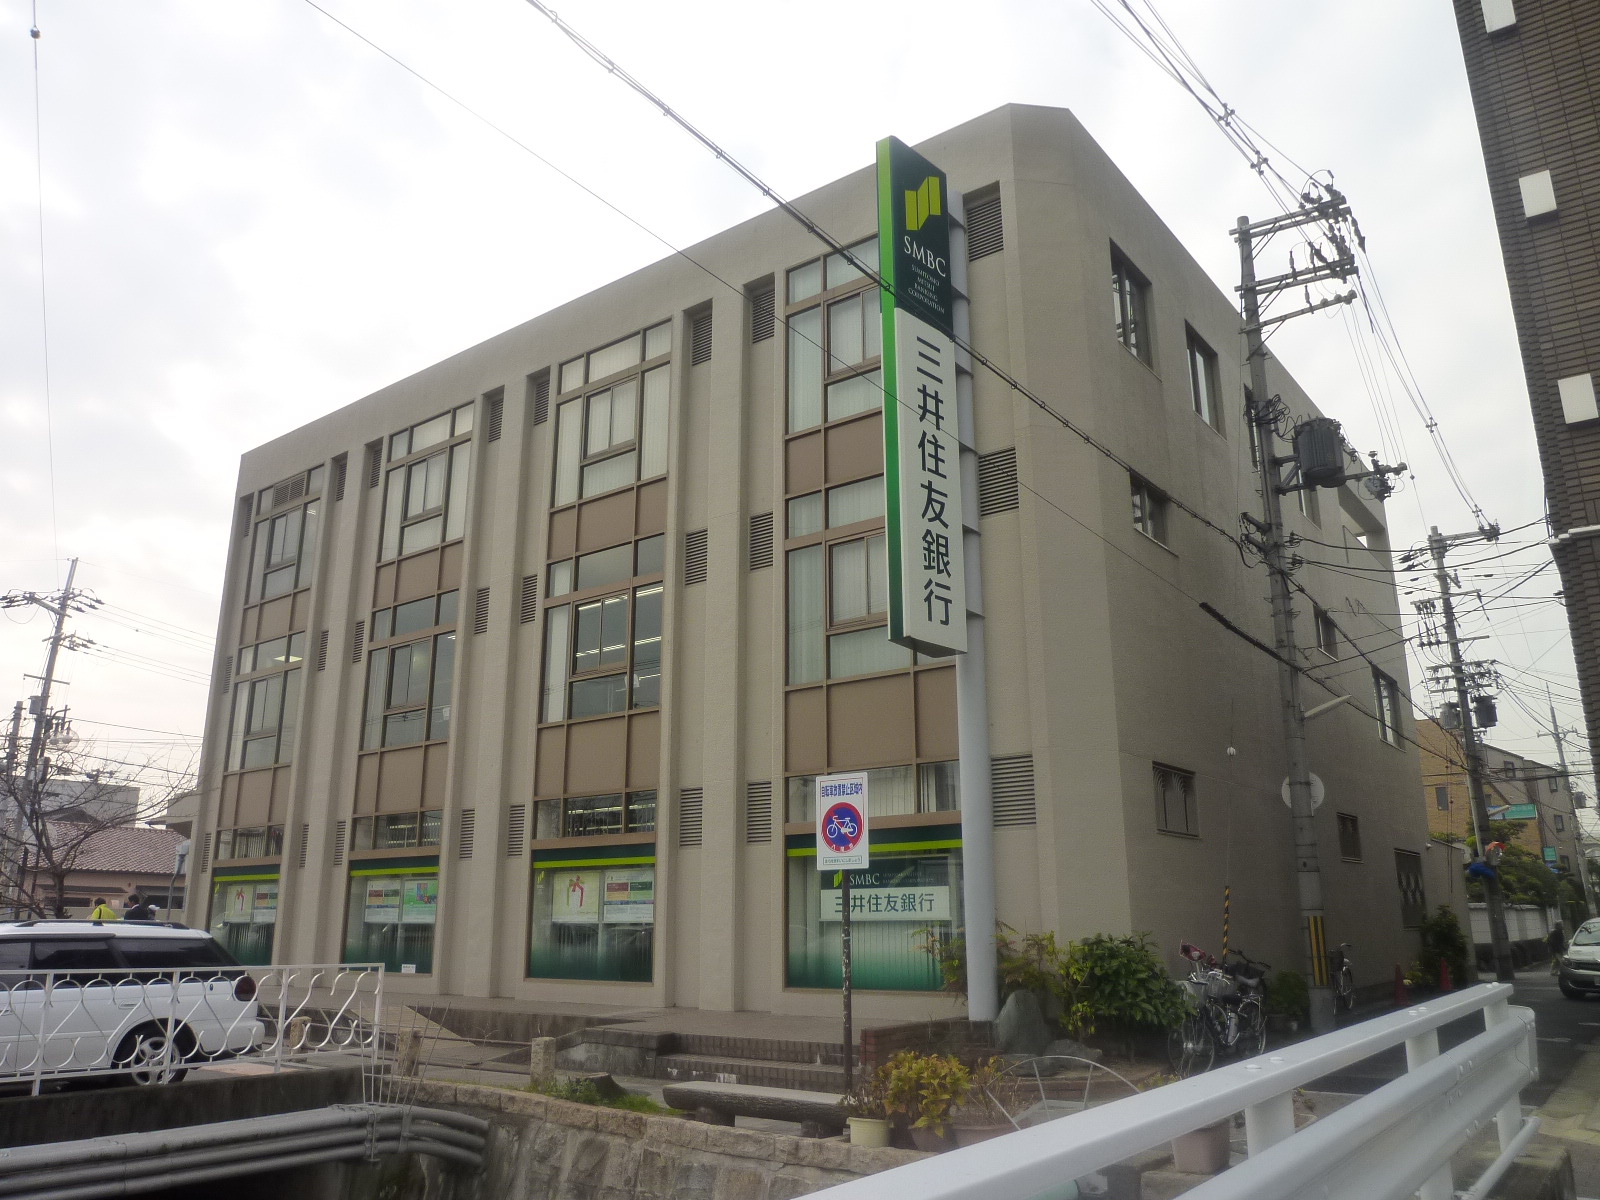 Bank. 698m to Sumitomo Mitsui Banking Corporation Yamamoto Branch (Bank)